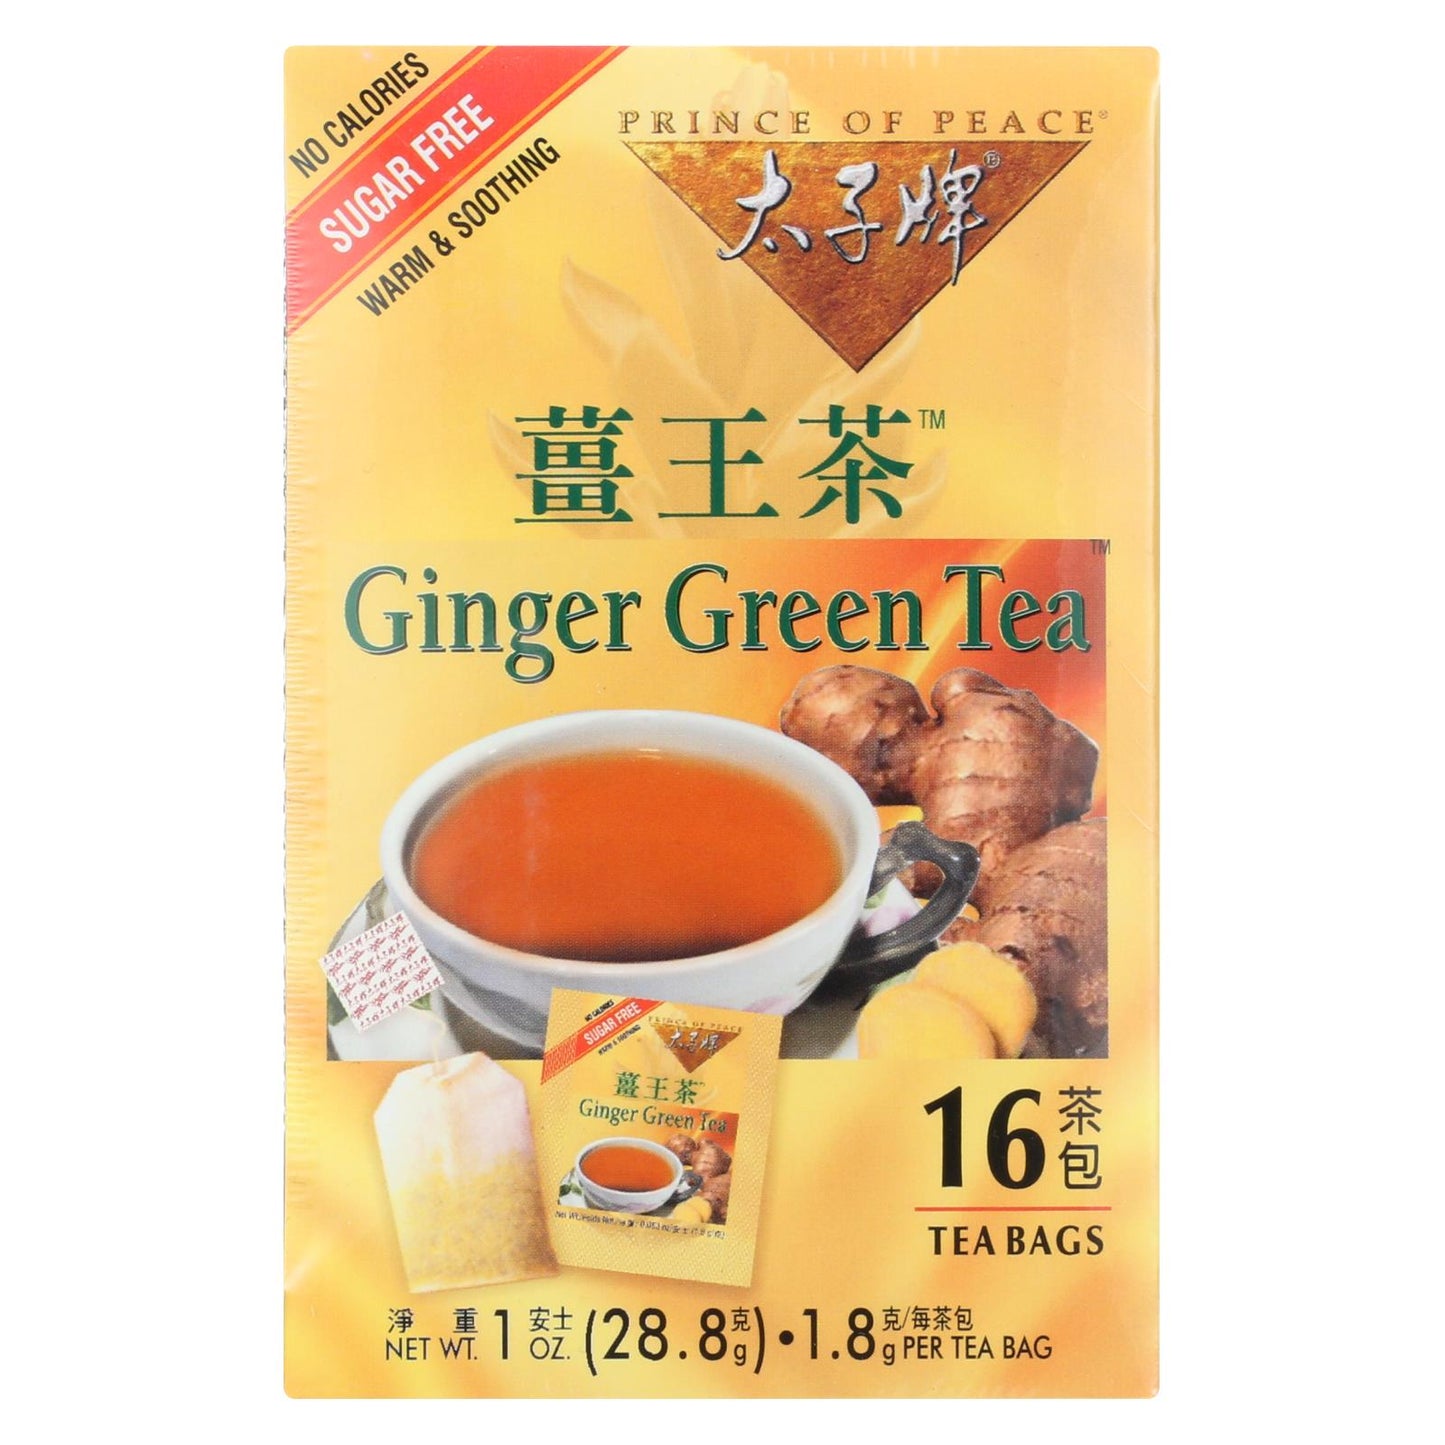 Prince Of Peace Ginger Green Tea - 16 Tea Bags